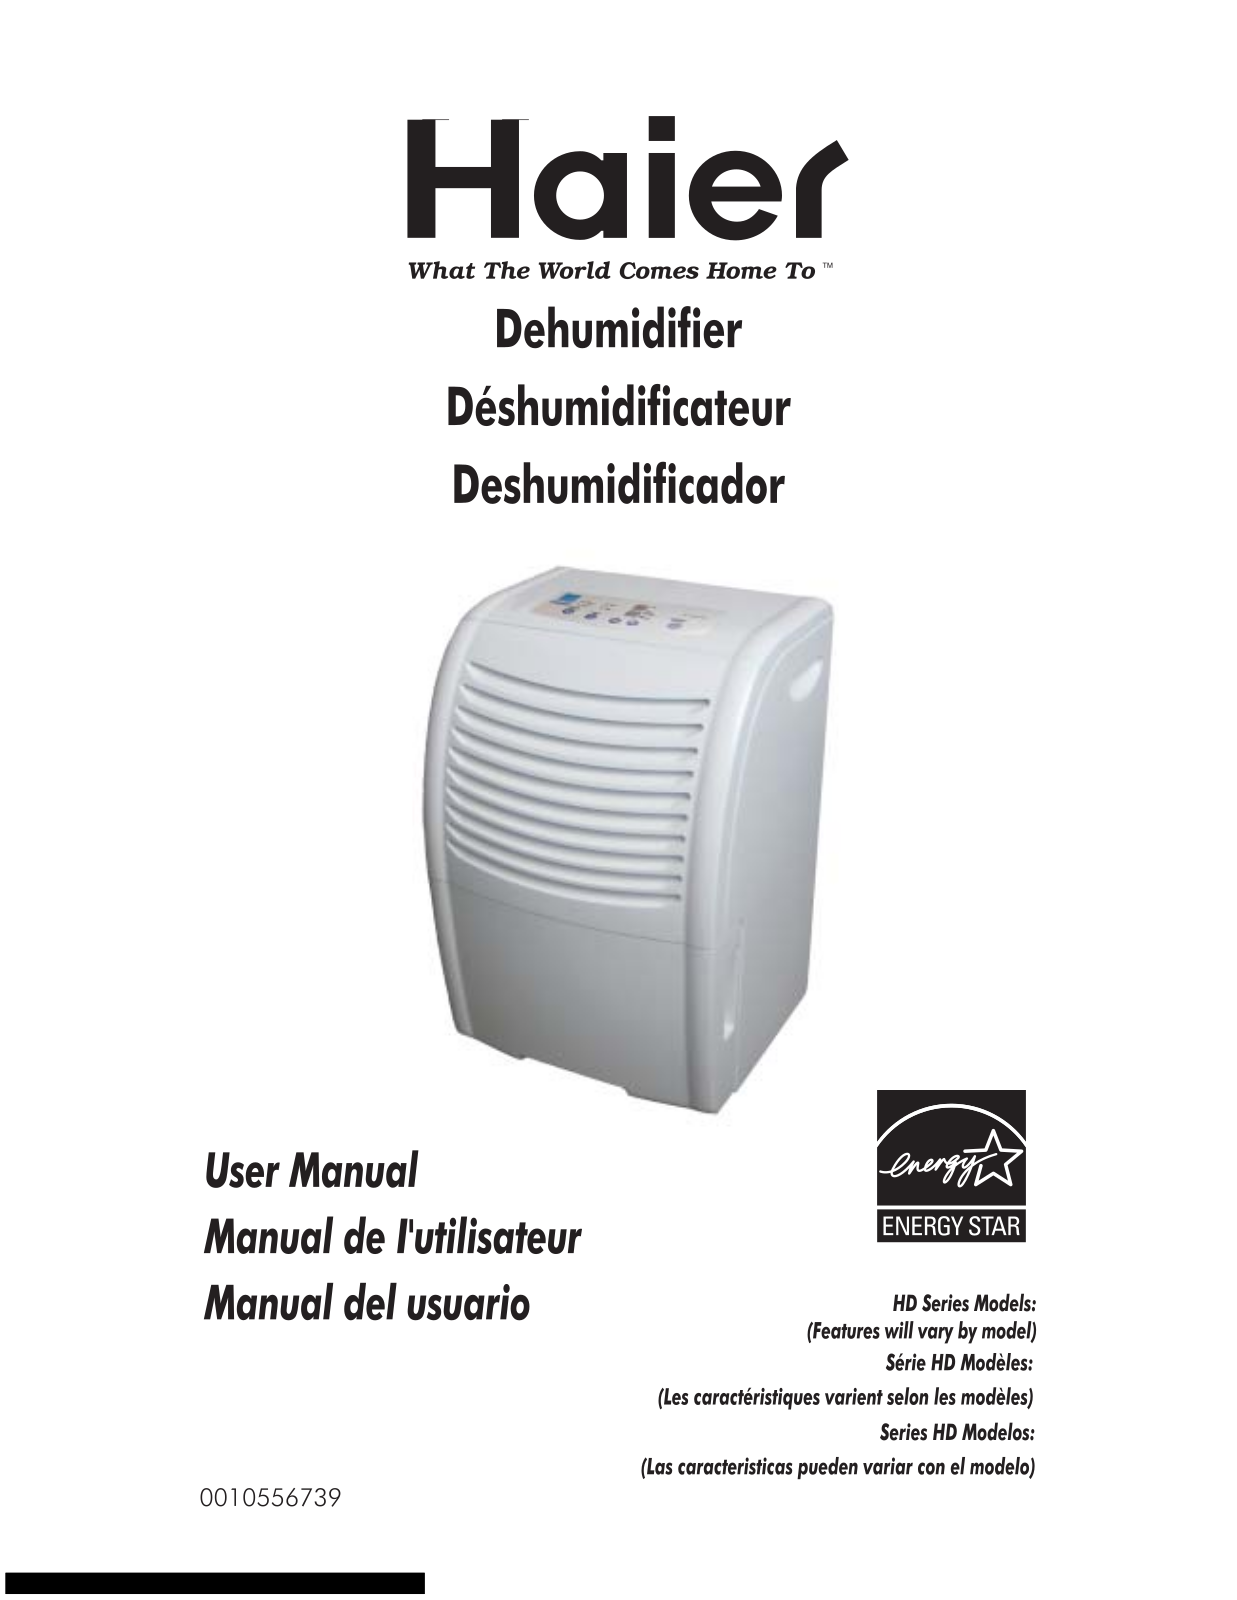 Haier Dehumidifier model User Manual